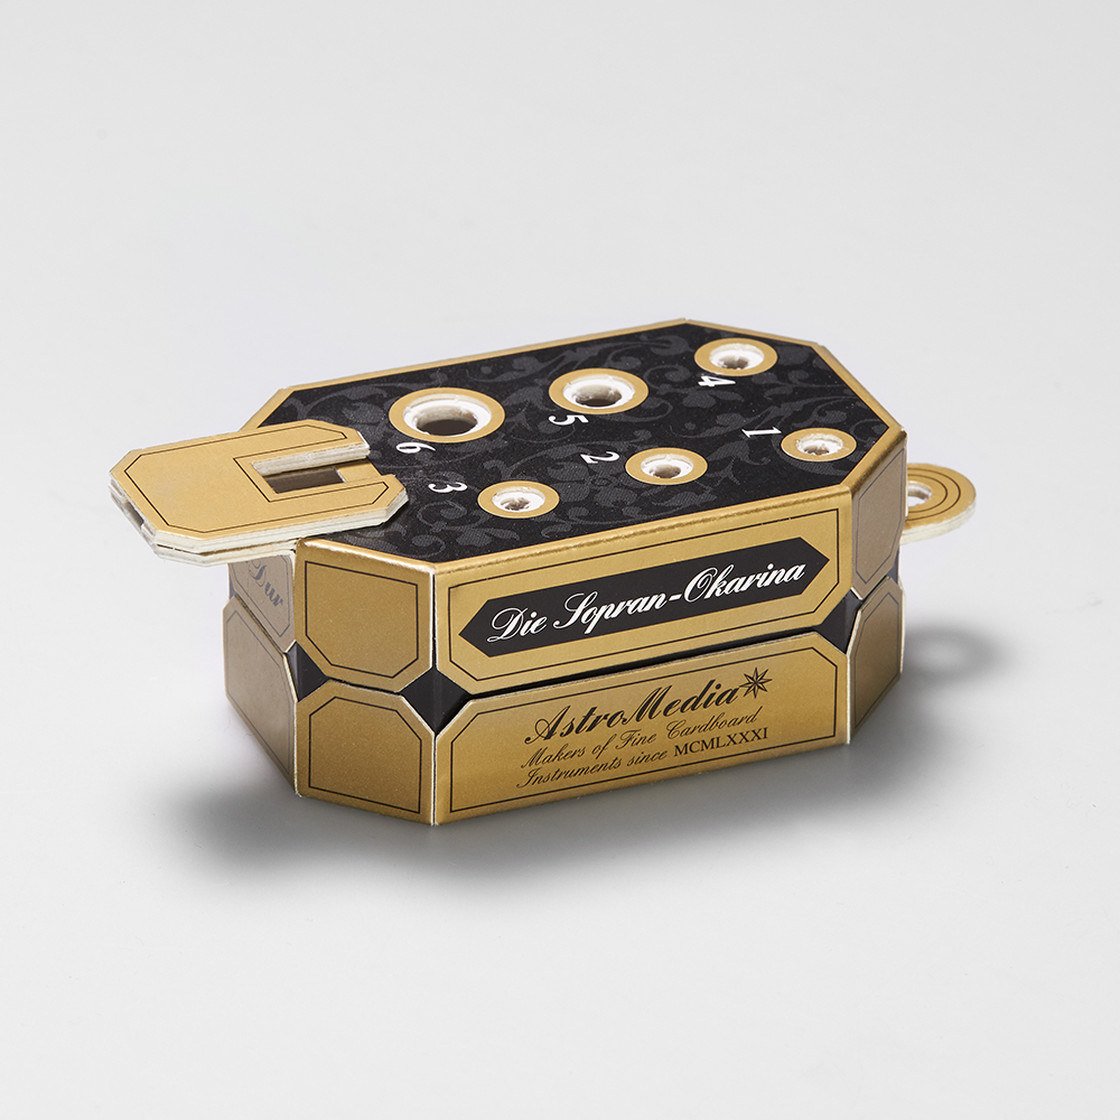 The soprano ocarina - Cardboard kit